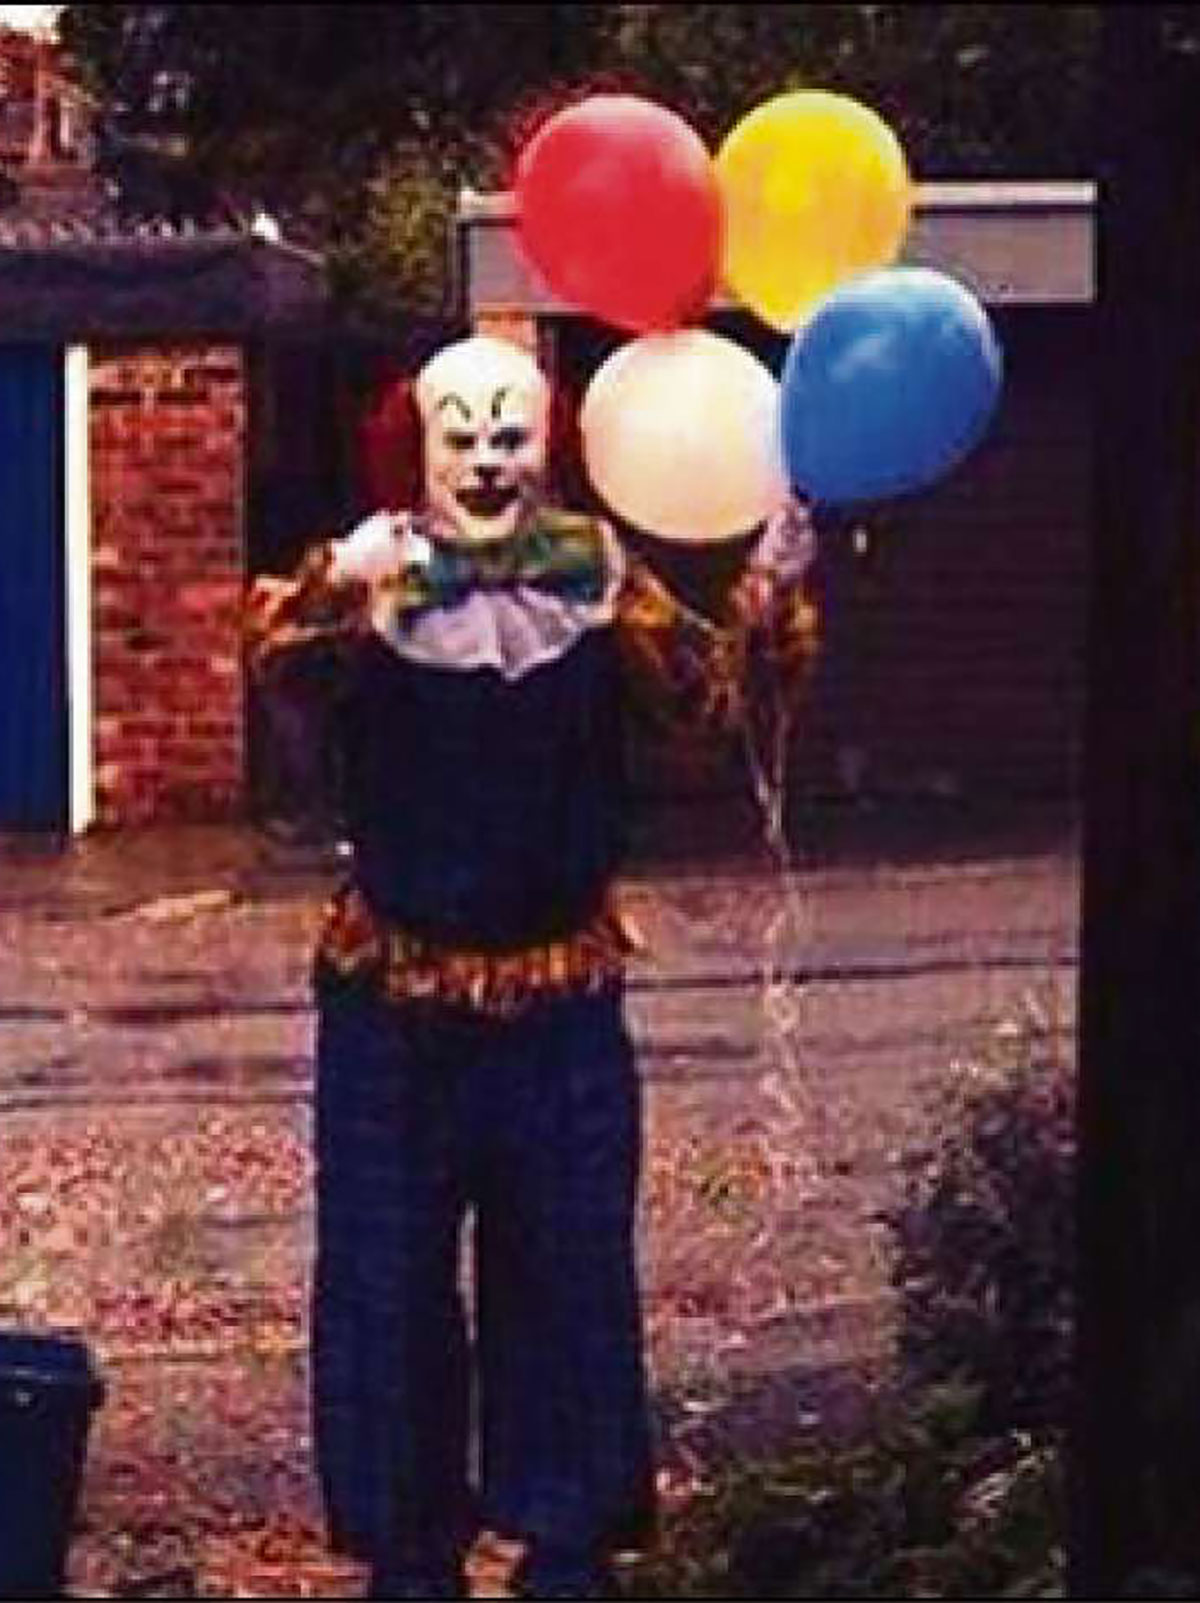 Killer Clowns could target Harrow schools say police